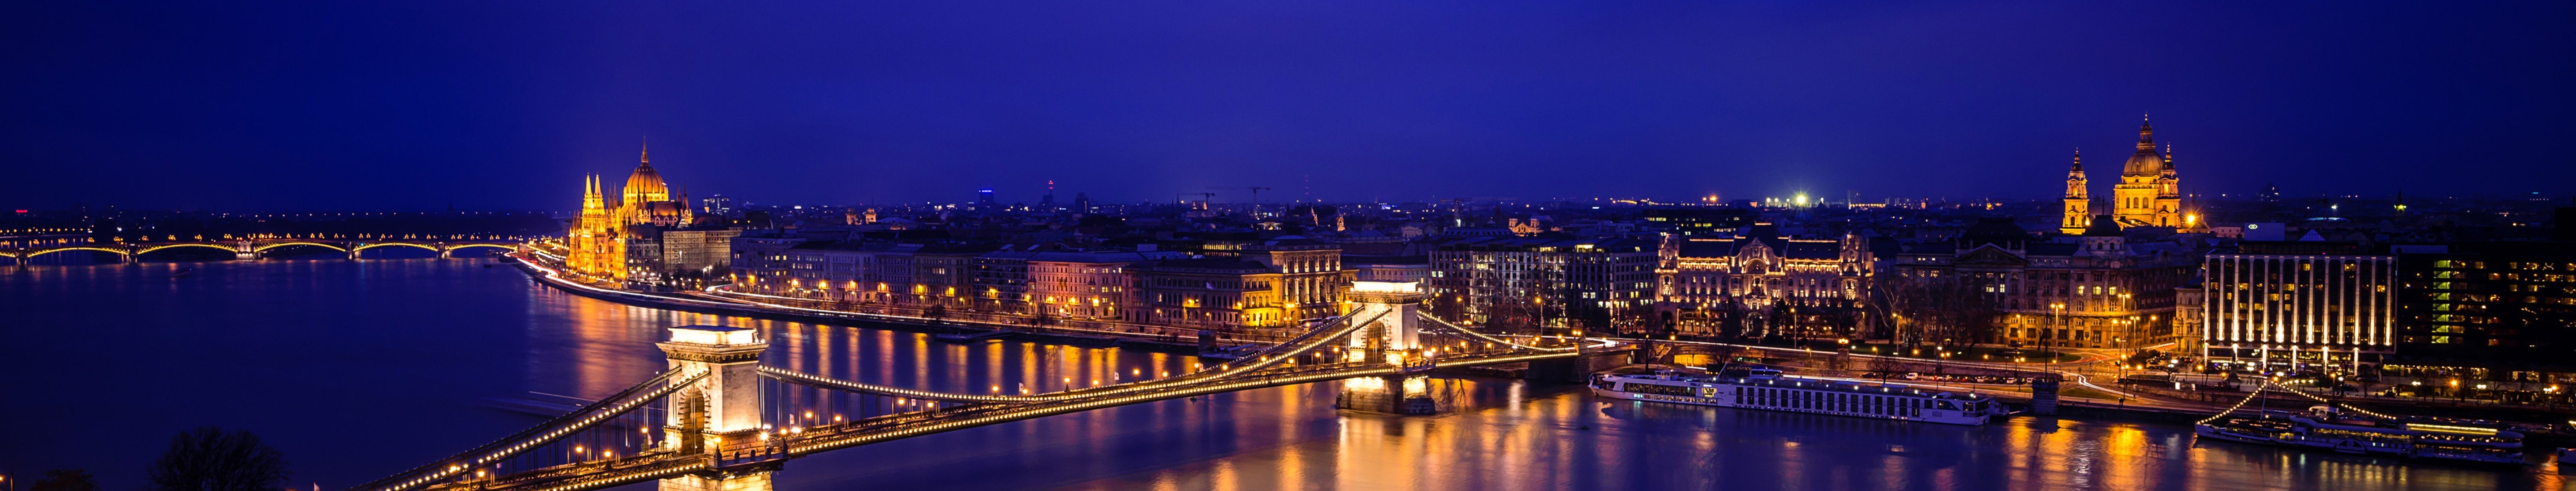 Hungary, Europe, City, Night, Gold, Blue, River, Lights, Building, Capital, Panorama, Boat, Bridge, Budapest, Hungarian Parliament Building, Chain Bridge Wallpaper